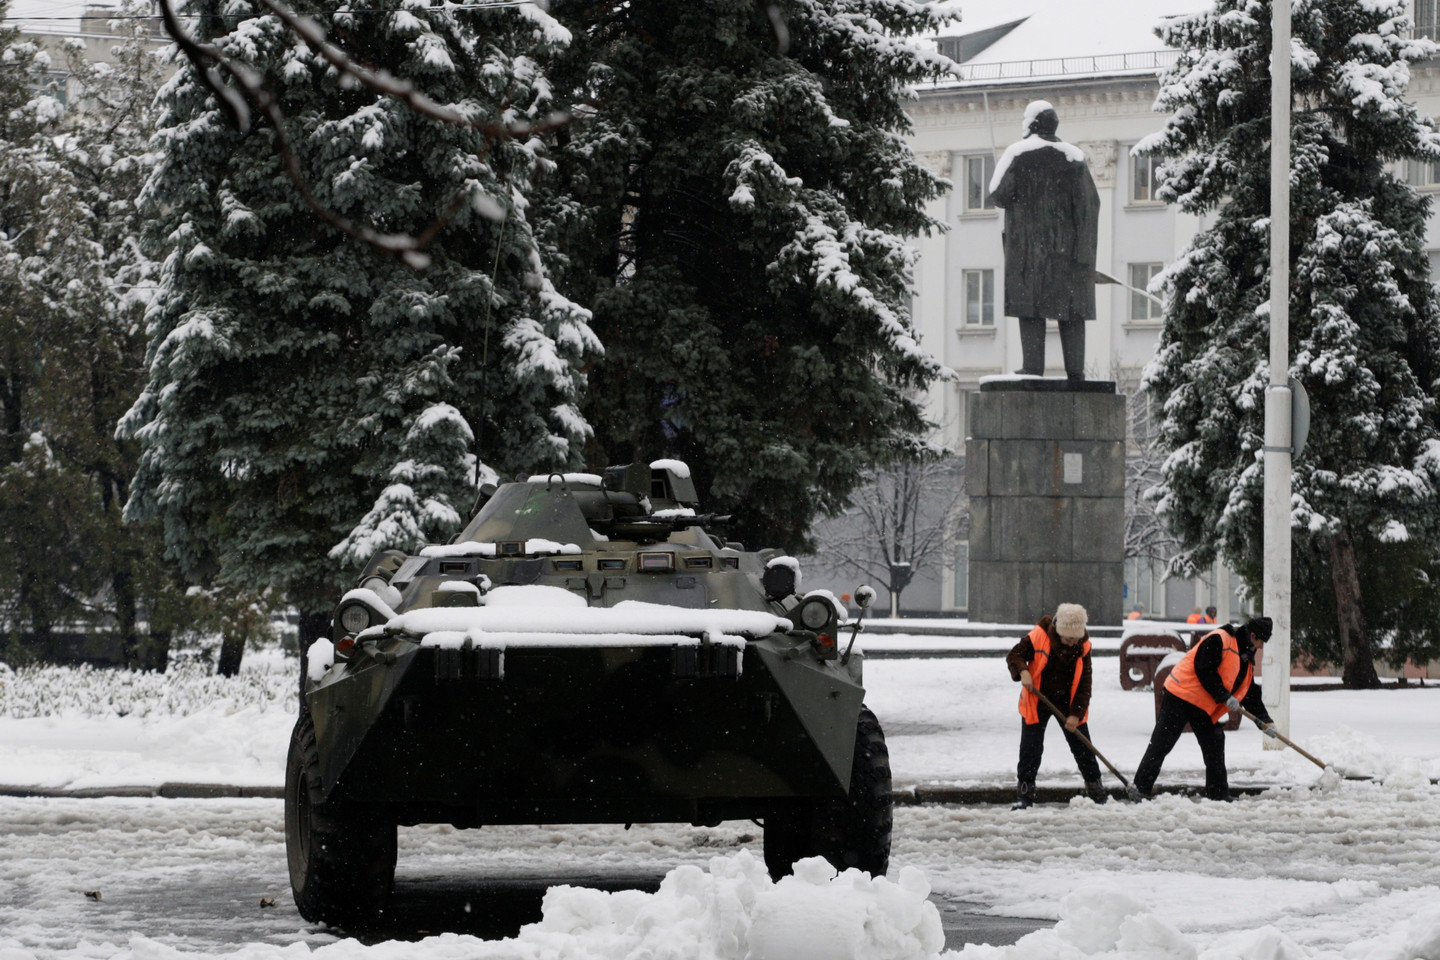  Luhansko gatvėse patruliavo kariškiai<br> Reuters/Scanpix nuotr.